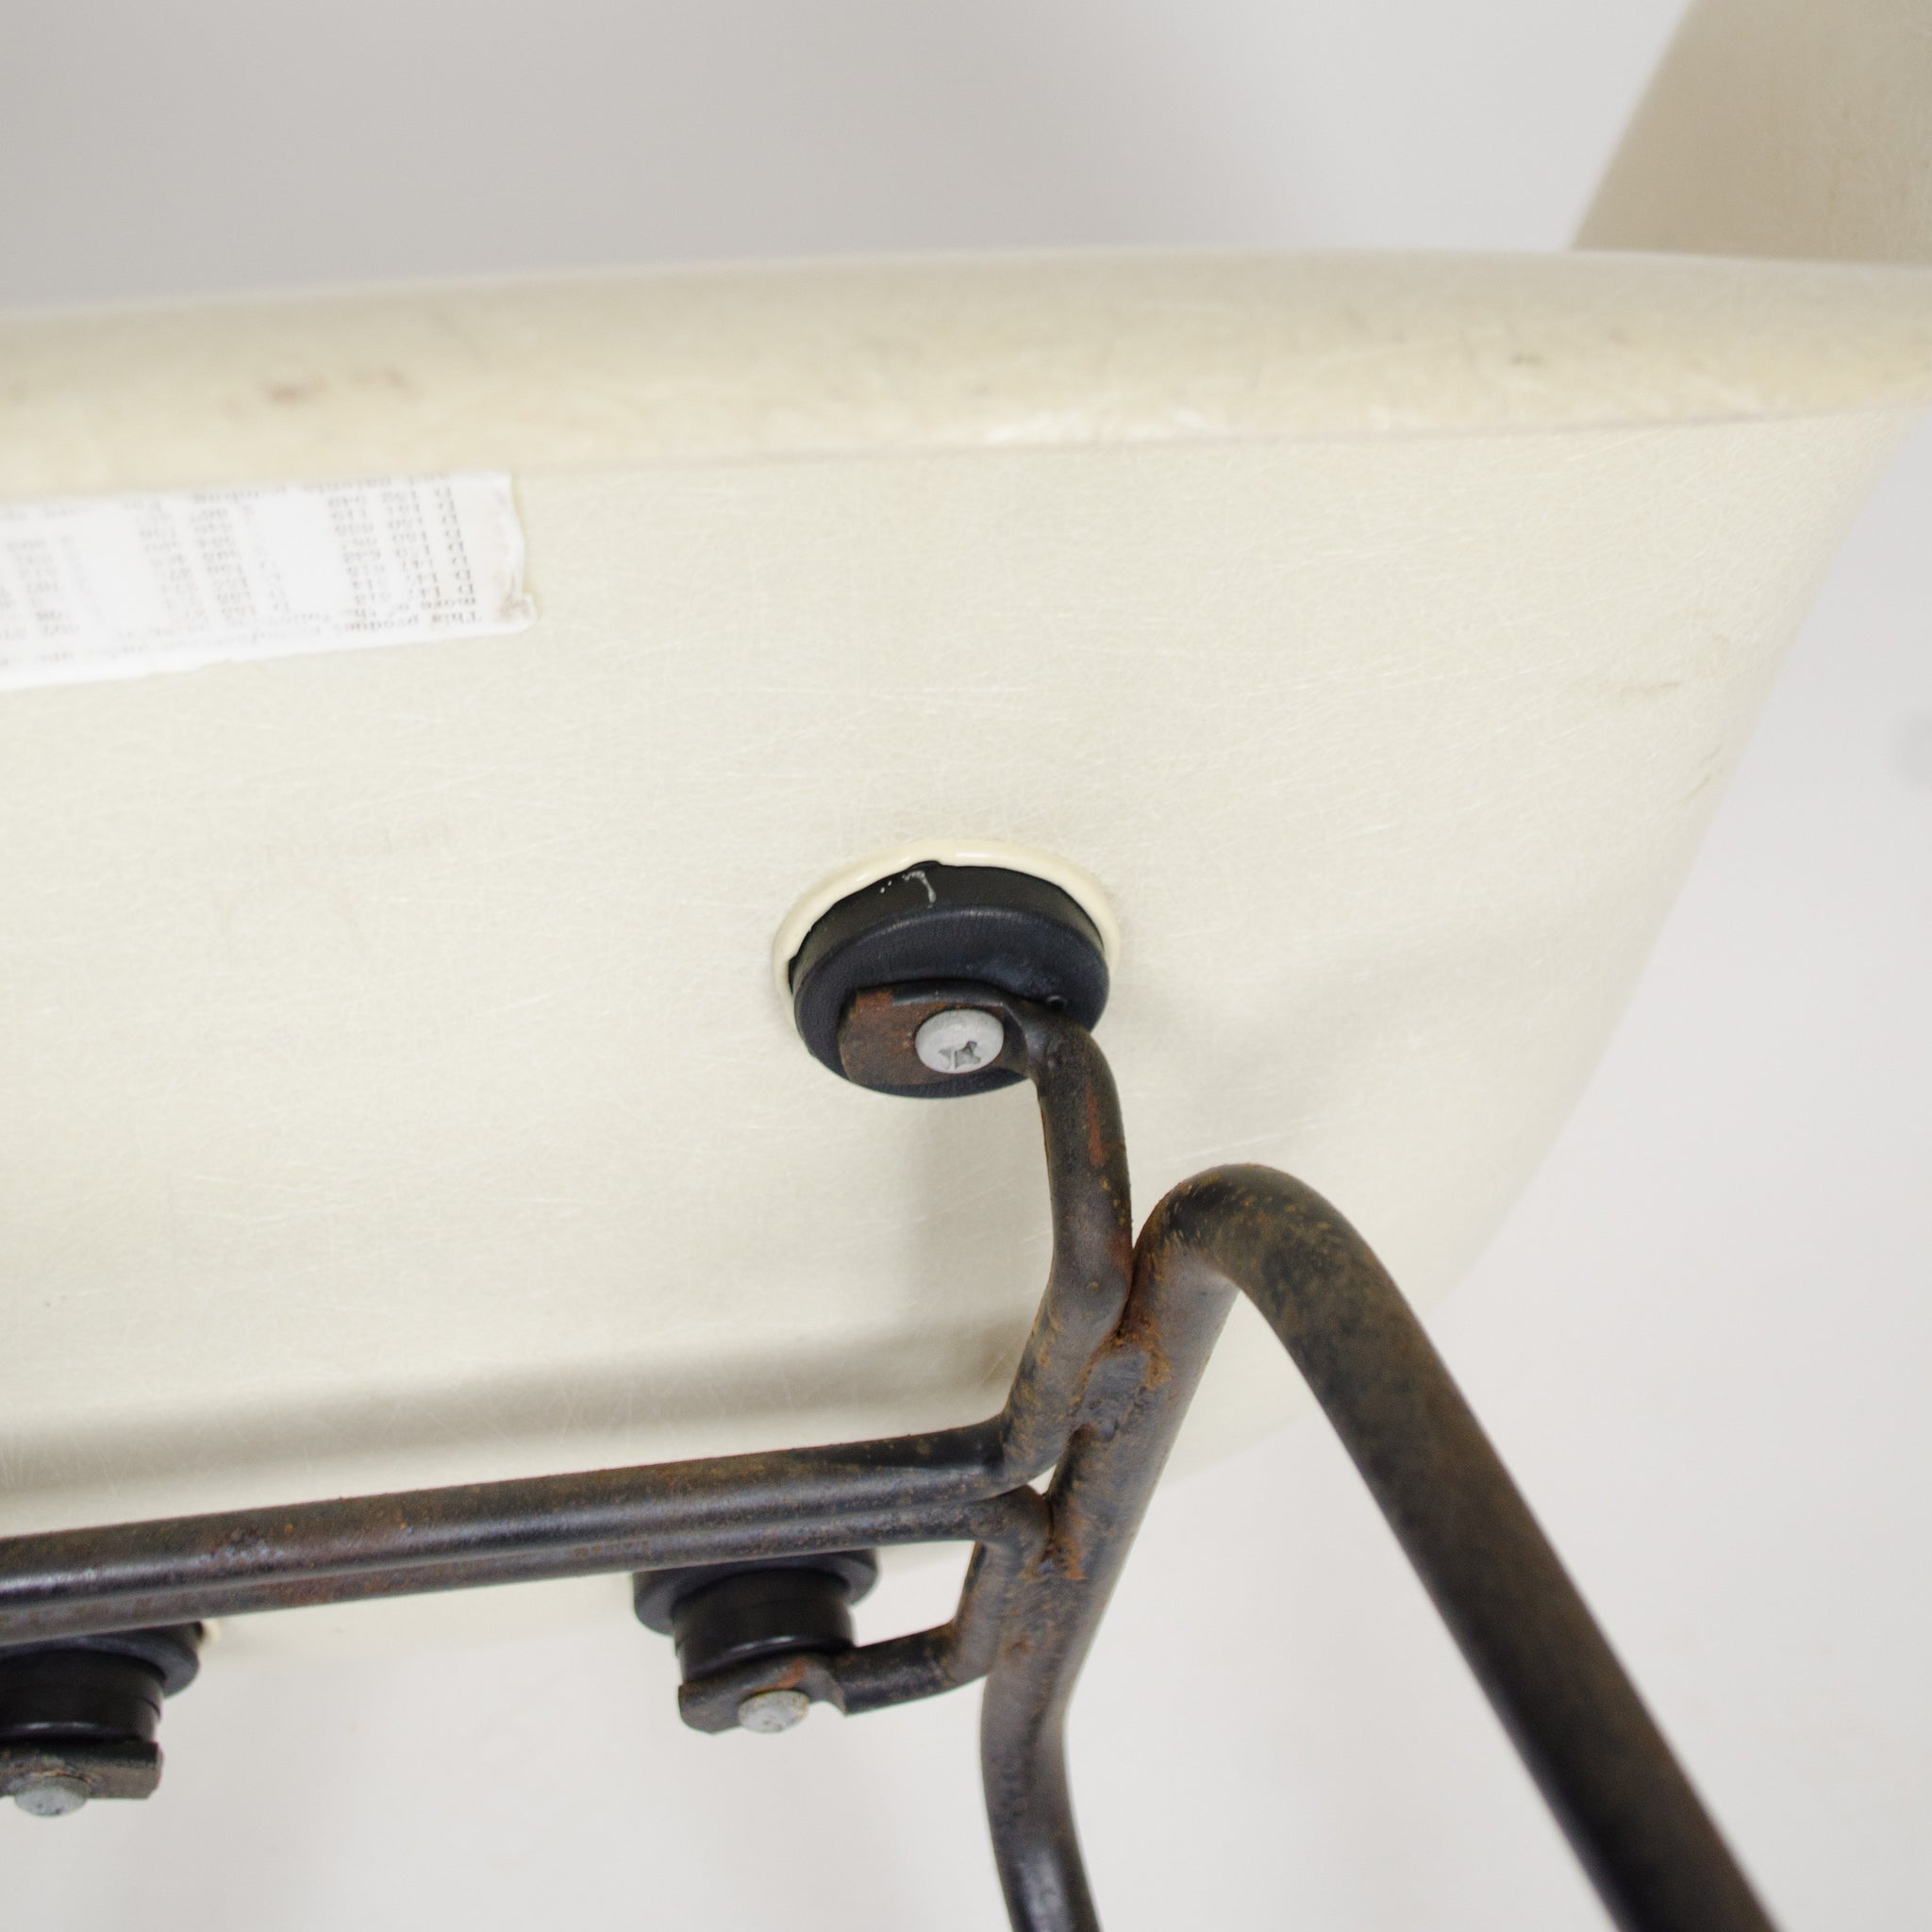 SOLD Herman Miller Eames 1950's Ivory / White Fiberglass Shell Chairs Arm Shells 2x